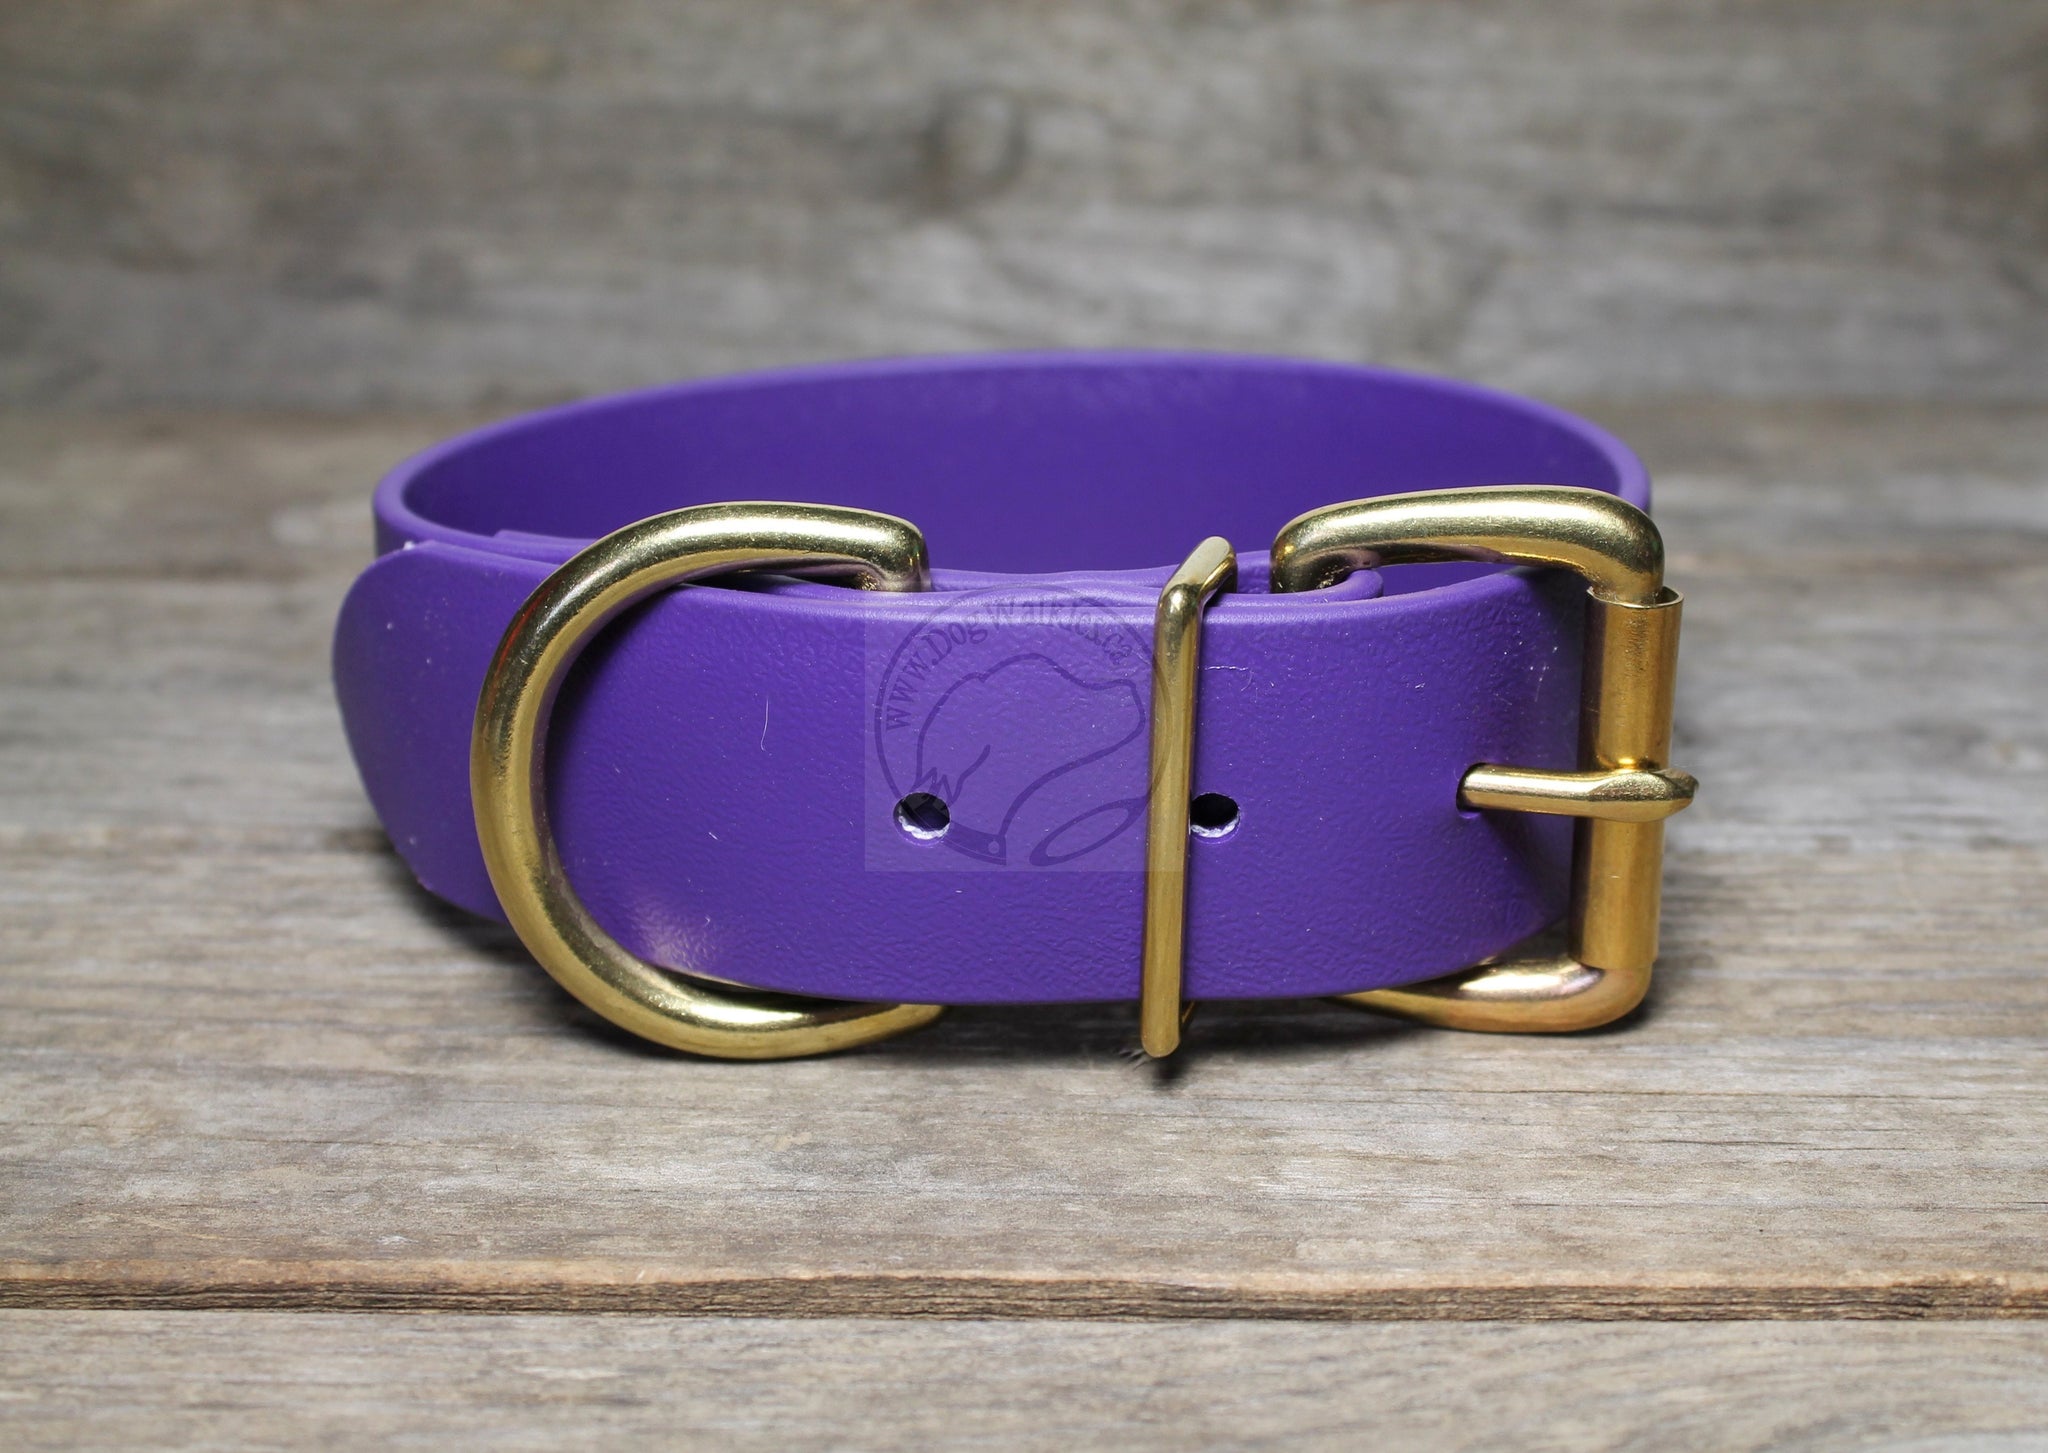 Royal Purple Biothane Dog Collar - Extra Wide - 1.5 inch (38mm) wide